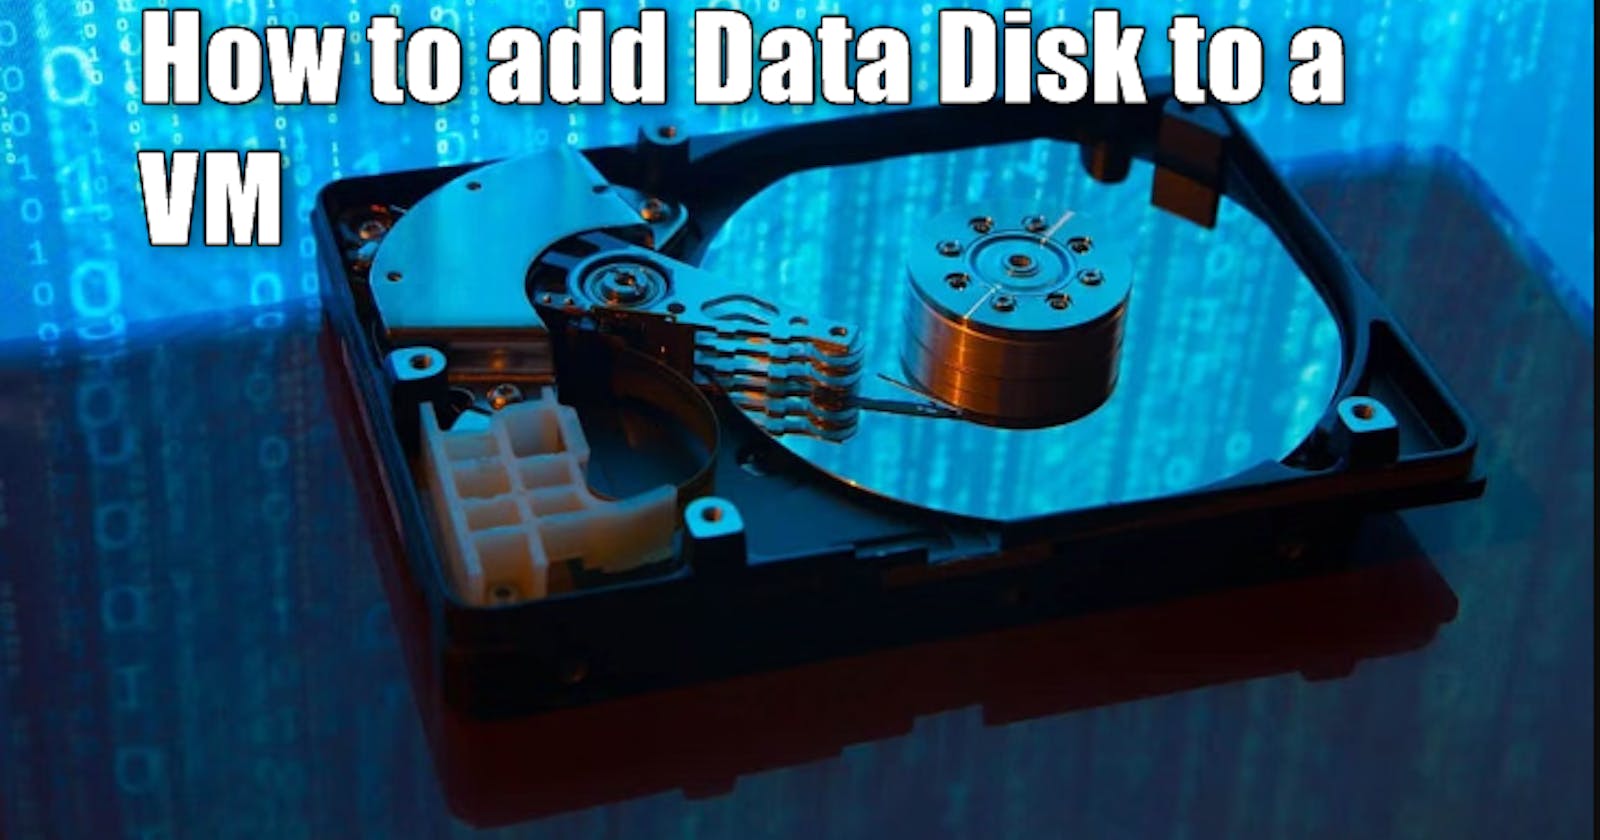 Adding a Data Disk to Virtual Machine